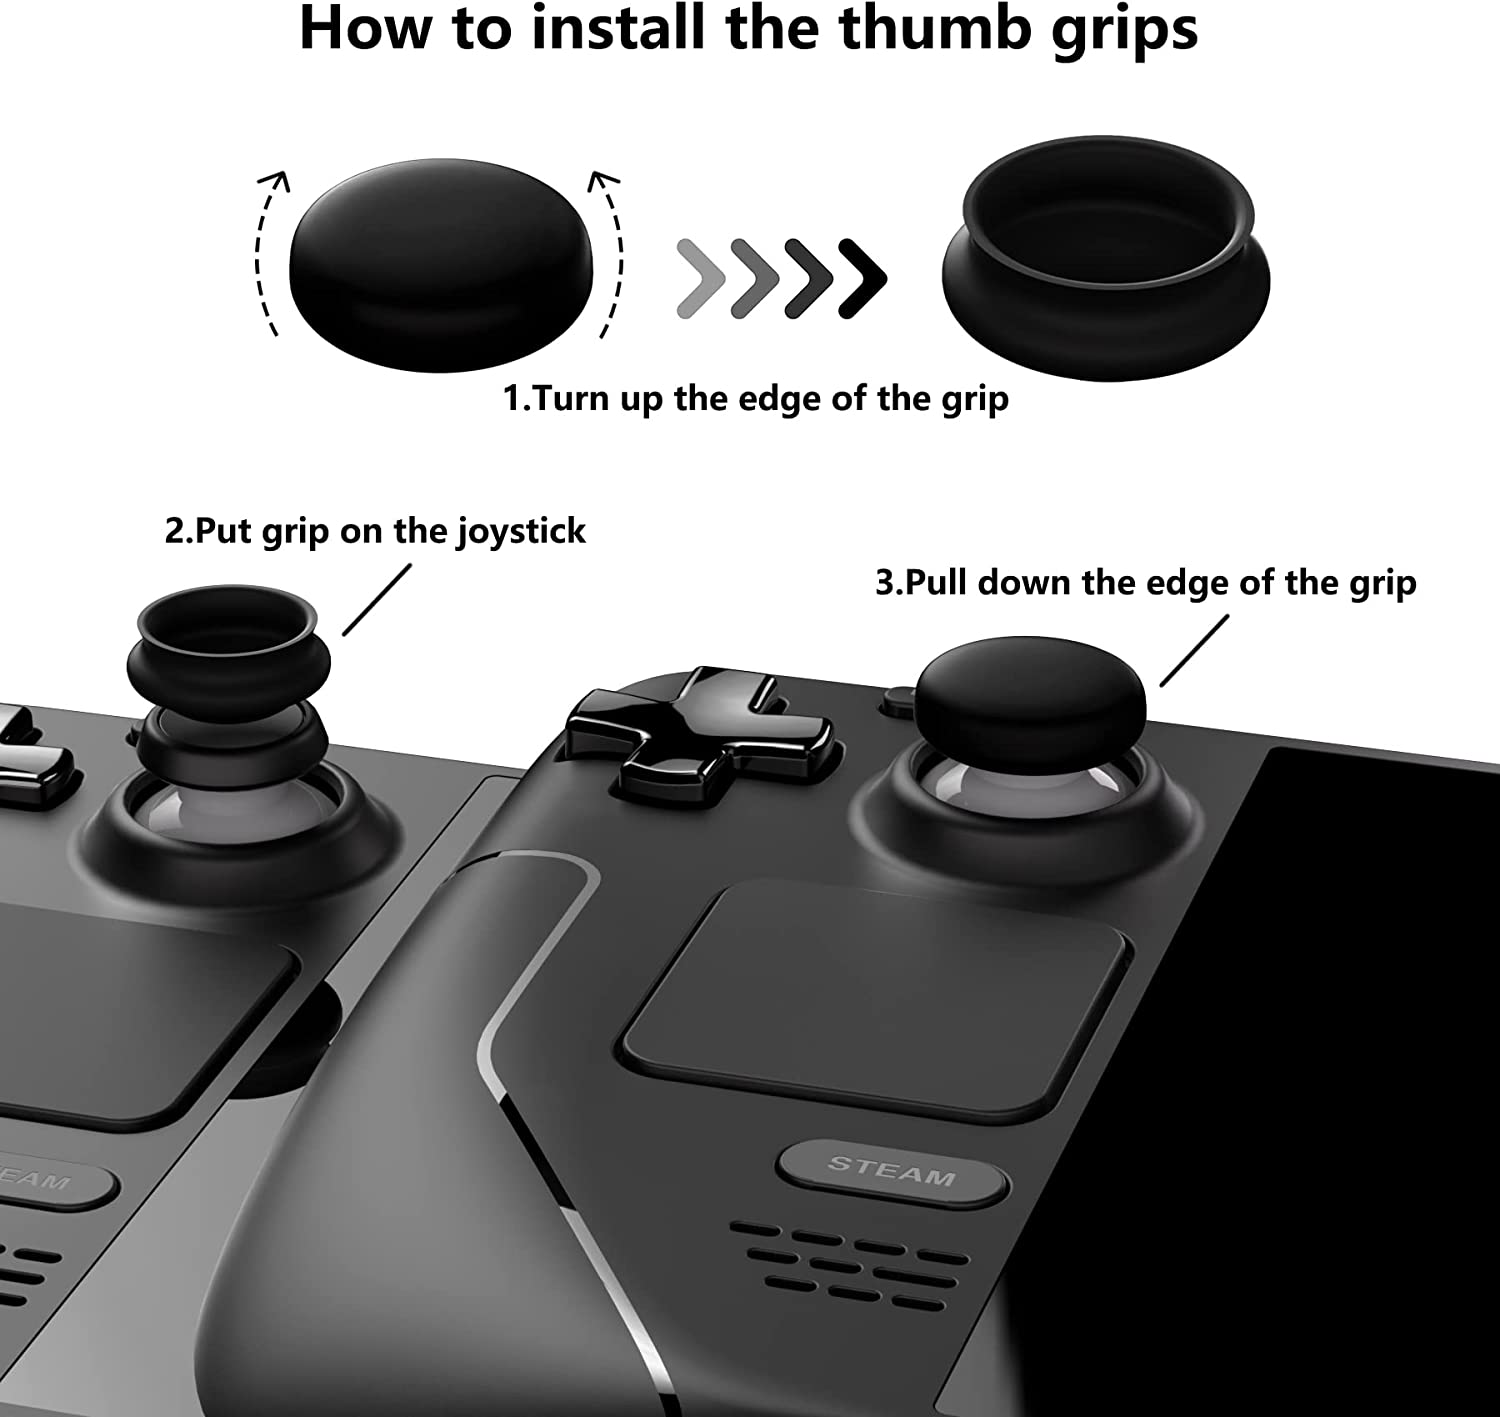 PlayVital Thumb Grip Caps for Steam Deck, Silicone Thumbsticks Grips Joystick Caps for Steam Deck - Fire Demons - YFSDM002 PlayVital